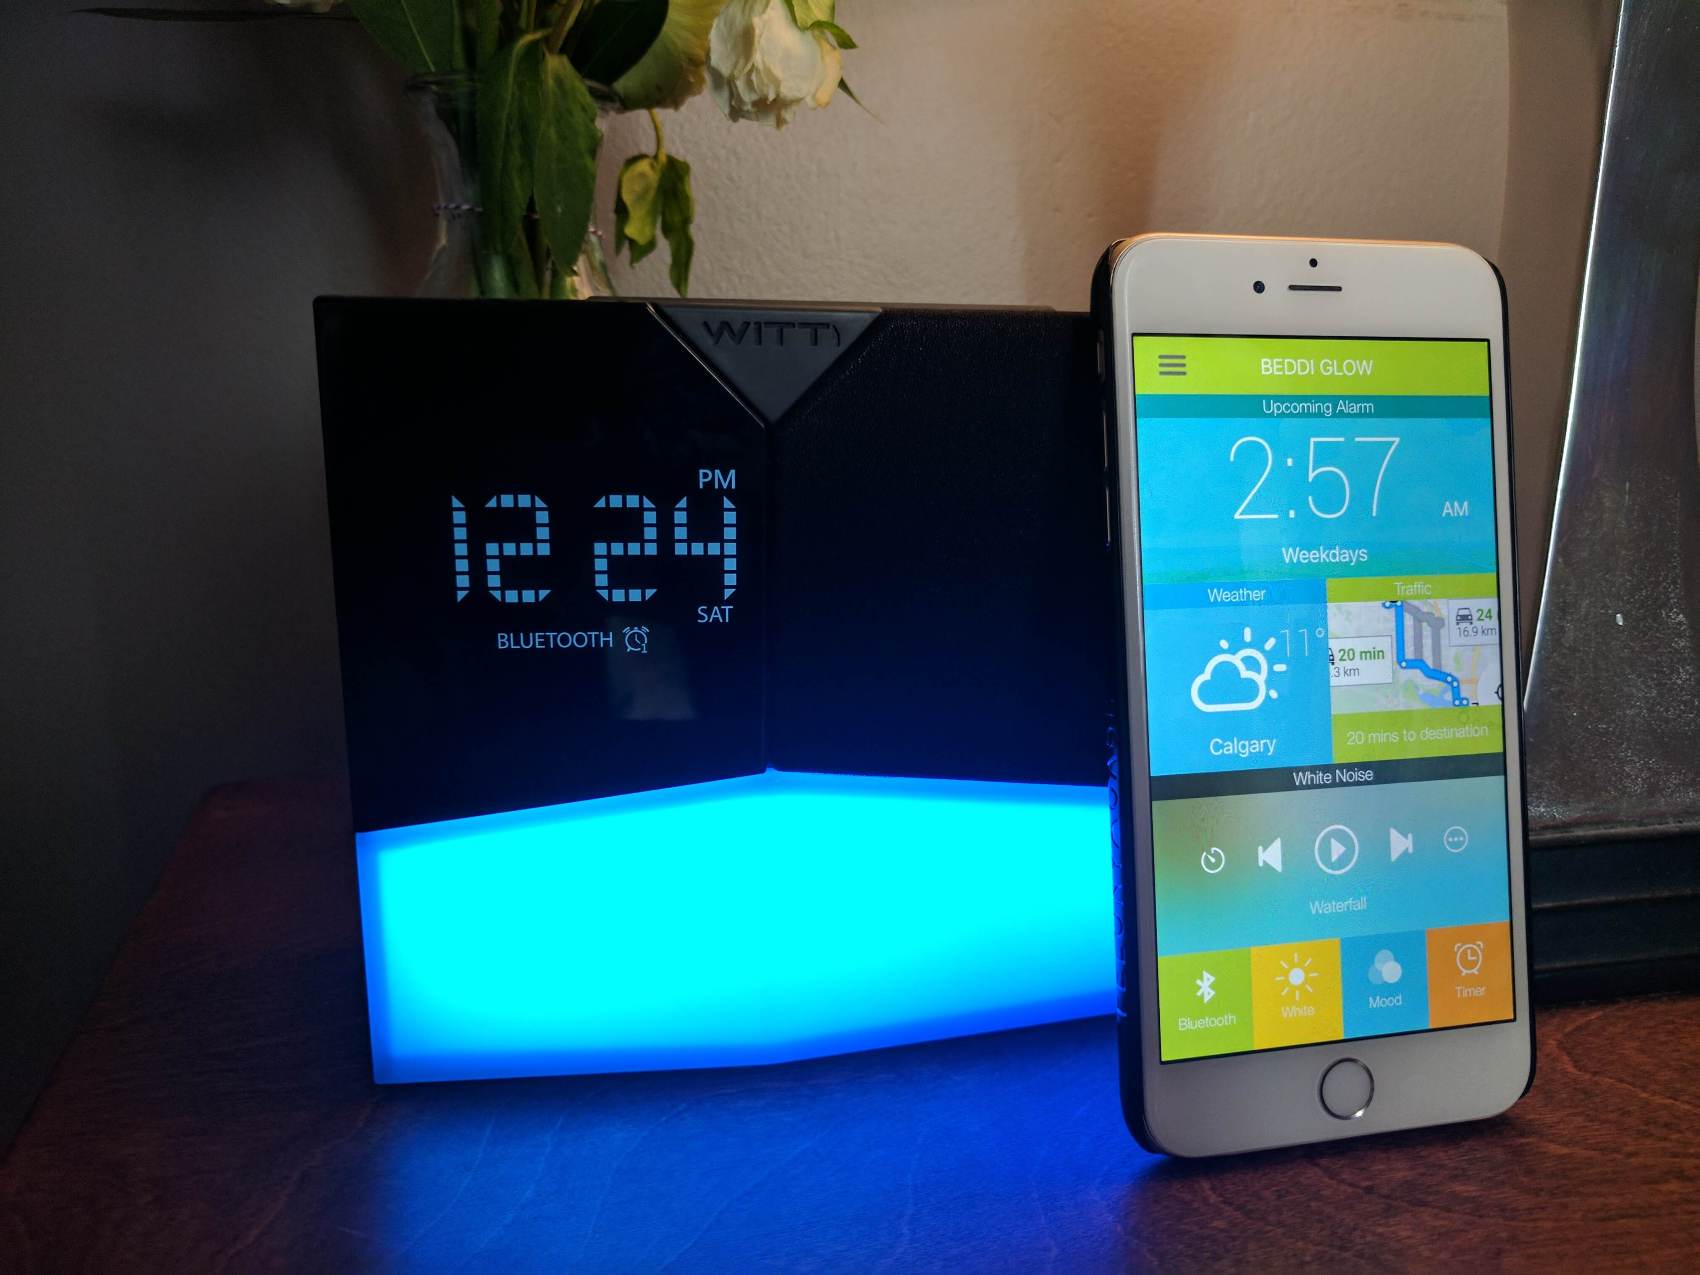 BEDDI Glow Smart Alarm Clock